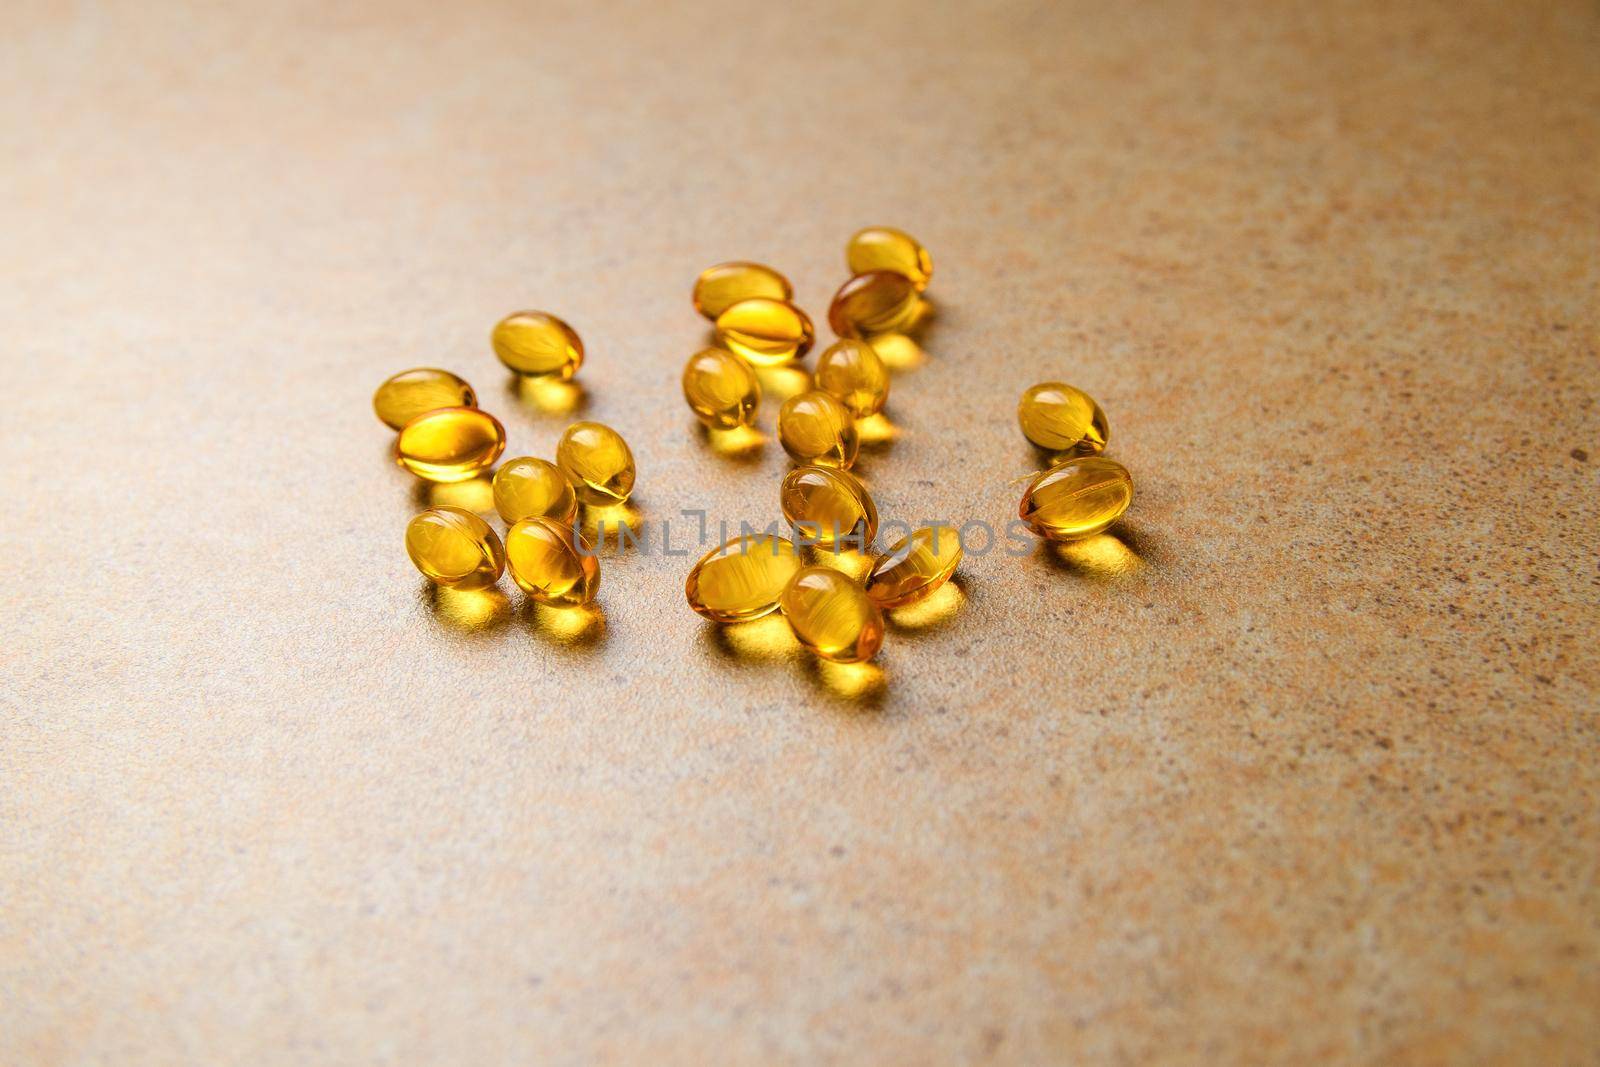 Vitamin D and fish oil capsules  by ozornina